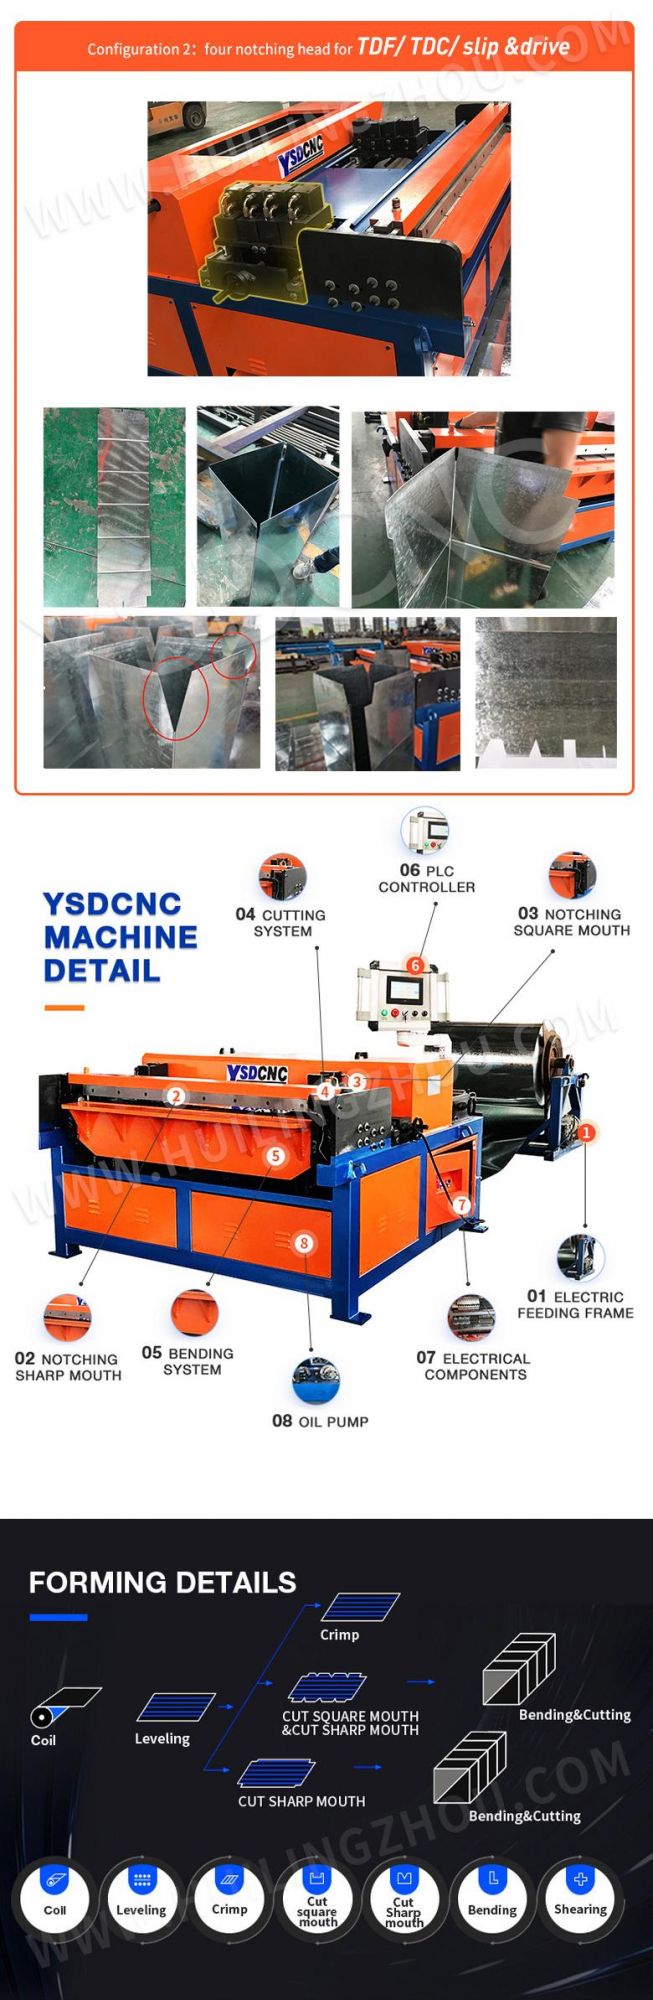 Ysdcnc Brand HVAC Auto Metal Duct Line 3, Tubeformer Machine